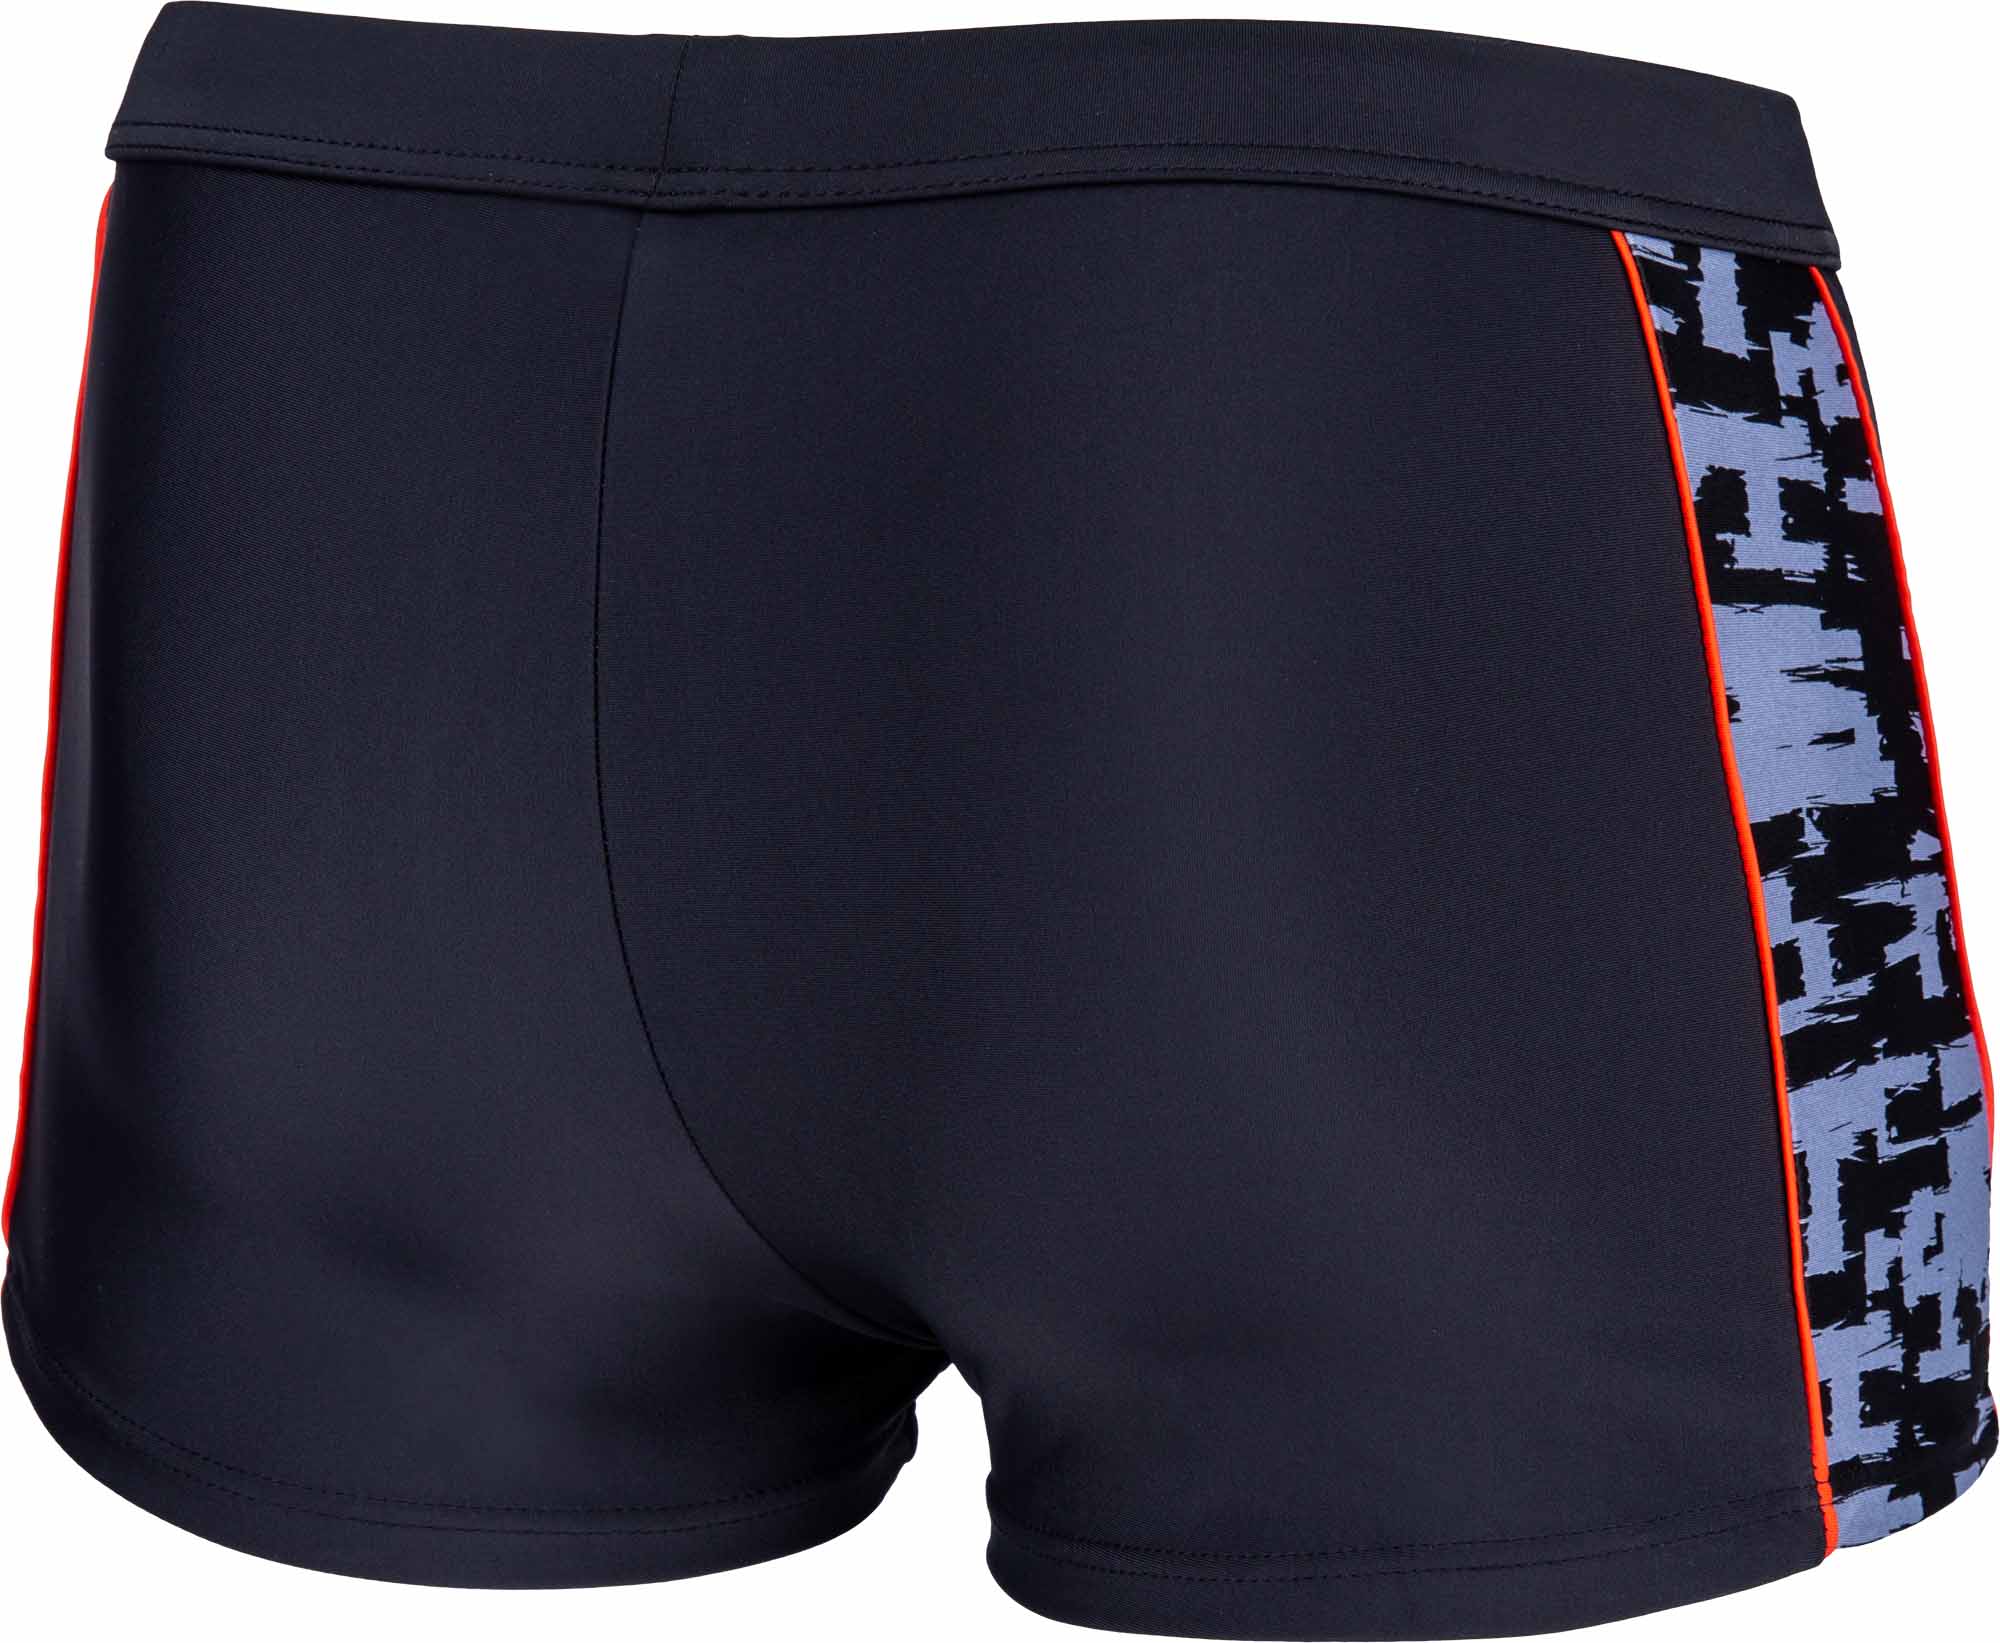 Men’s swim shorts